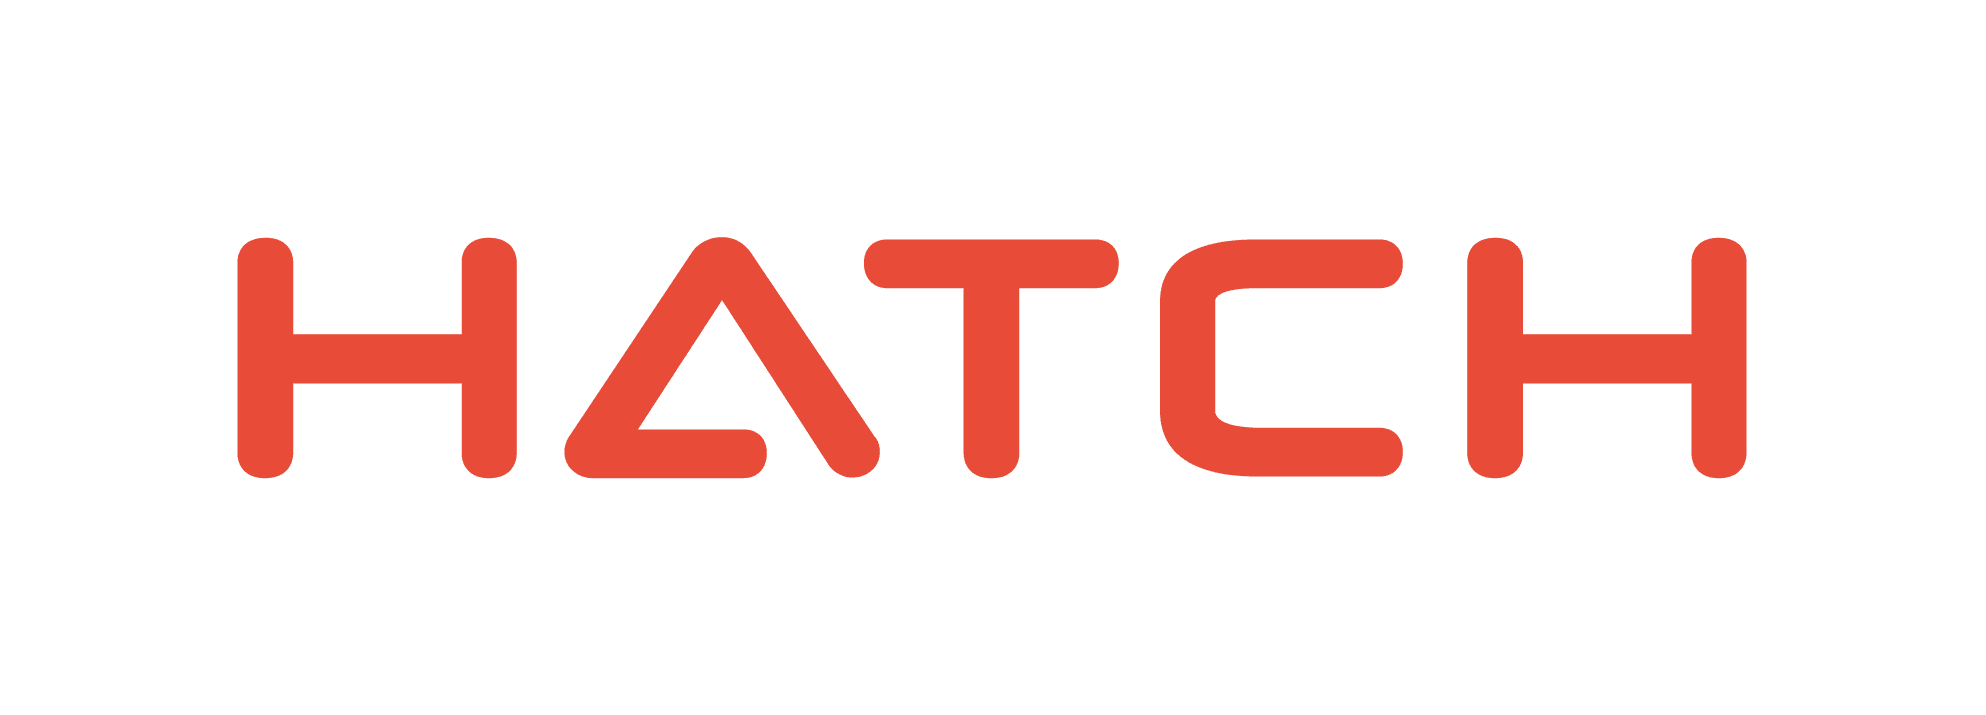 Logo Hatch